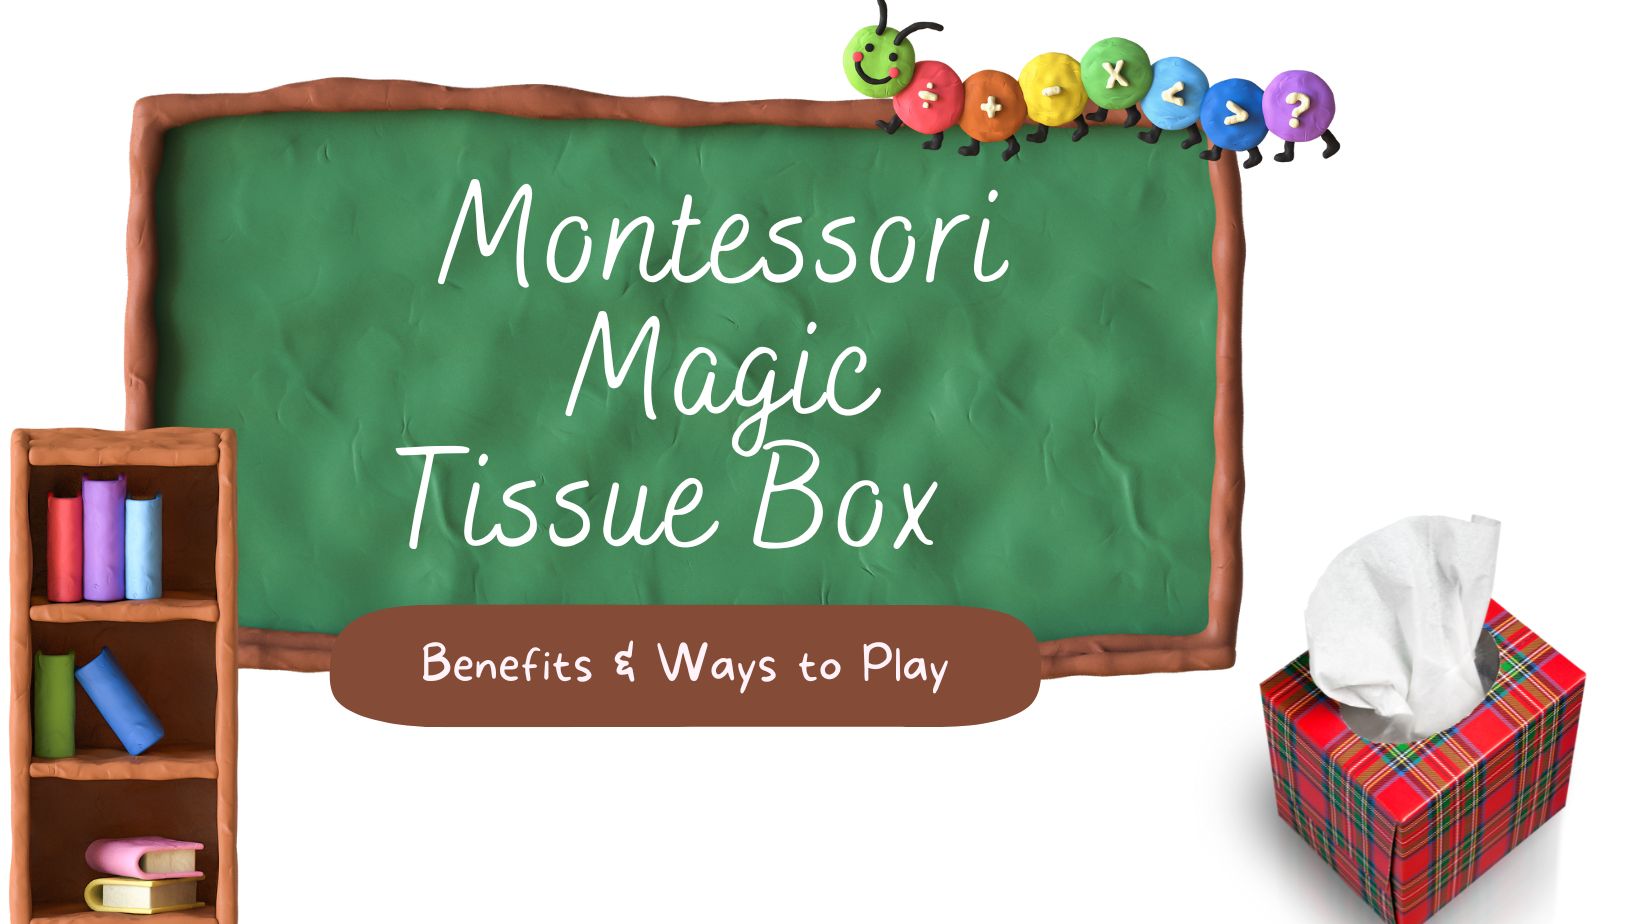 Benefits and Ways to Play with Montessori Magic Tissue Box